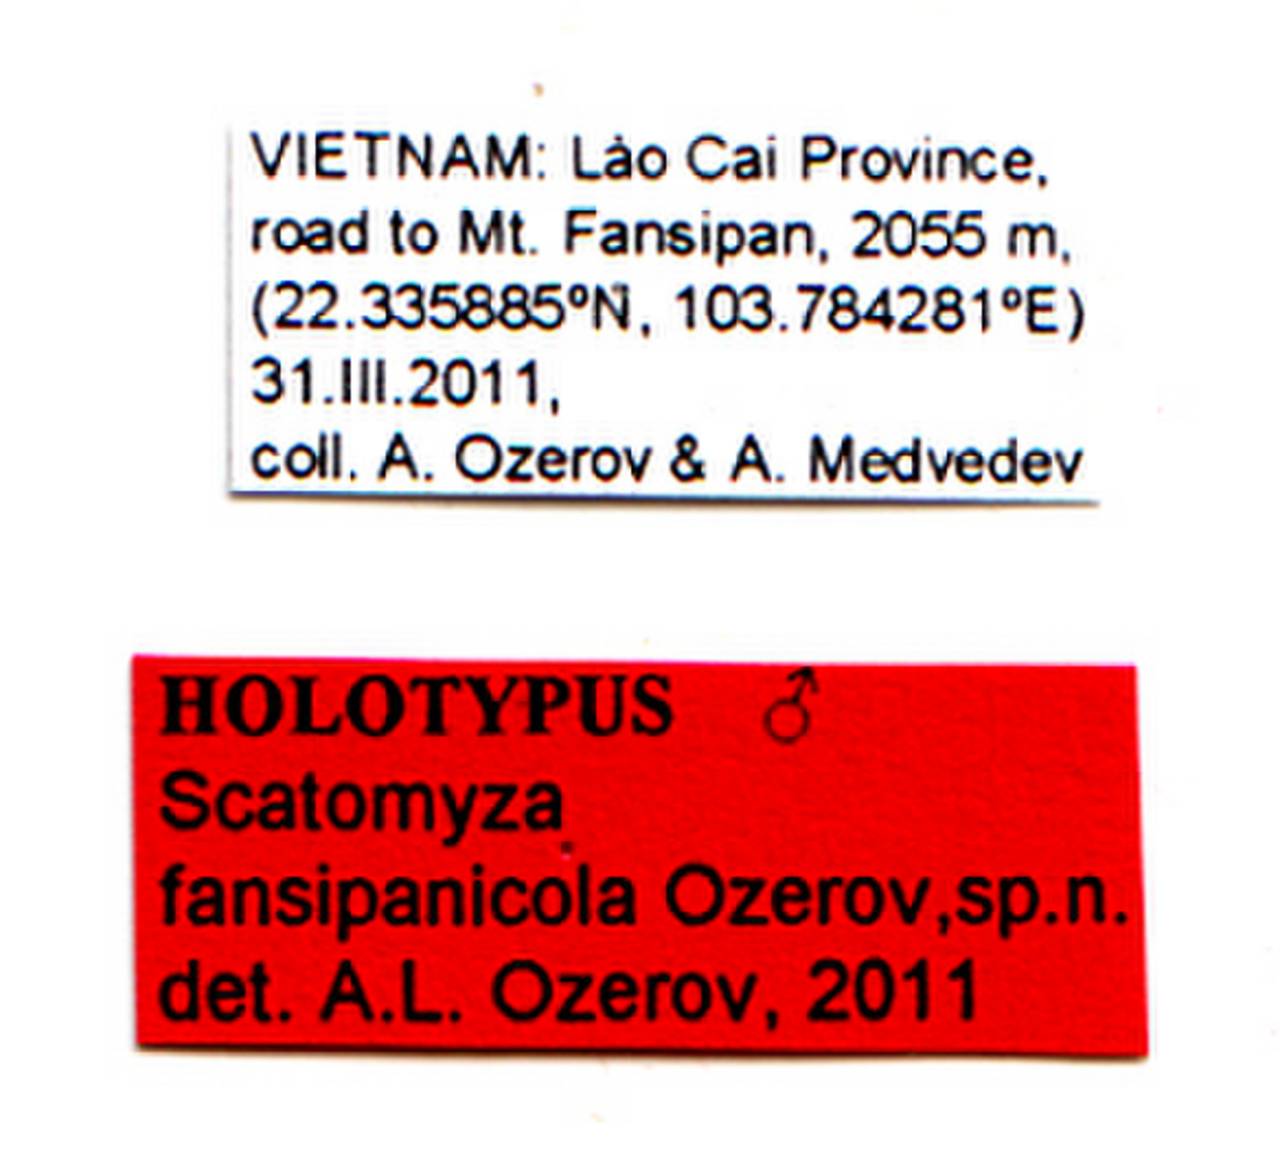 fansipanicola_ozerov_(scatomyza), Lào Cai Province (Vietnam)